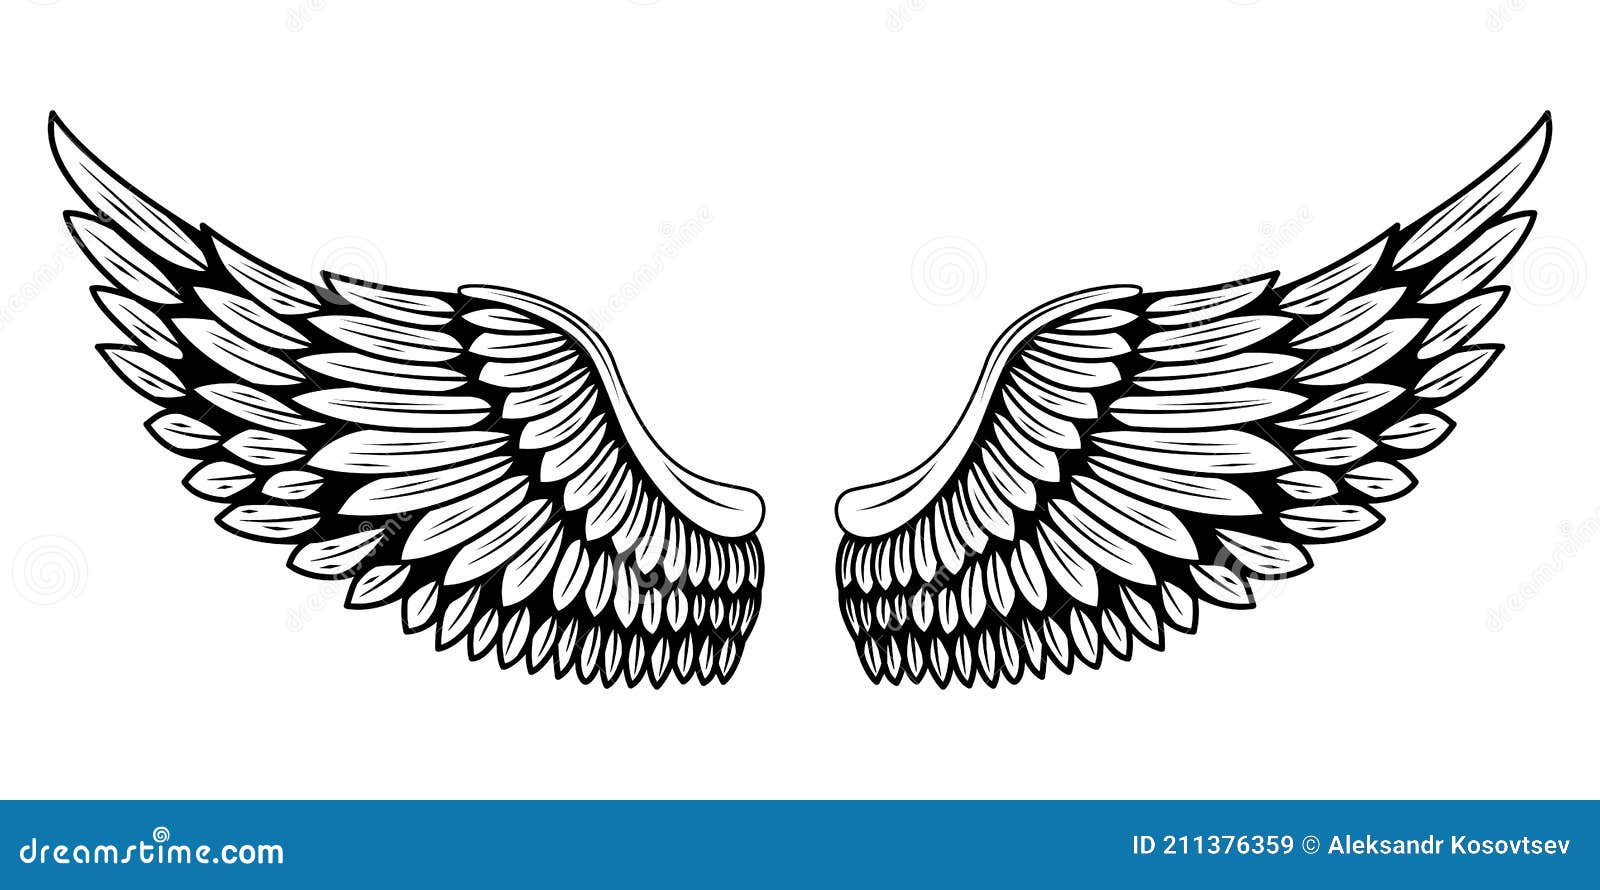 Wings_1 stock vector. Illustration of cartoon, drawing - 211376359